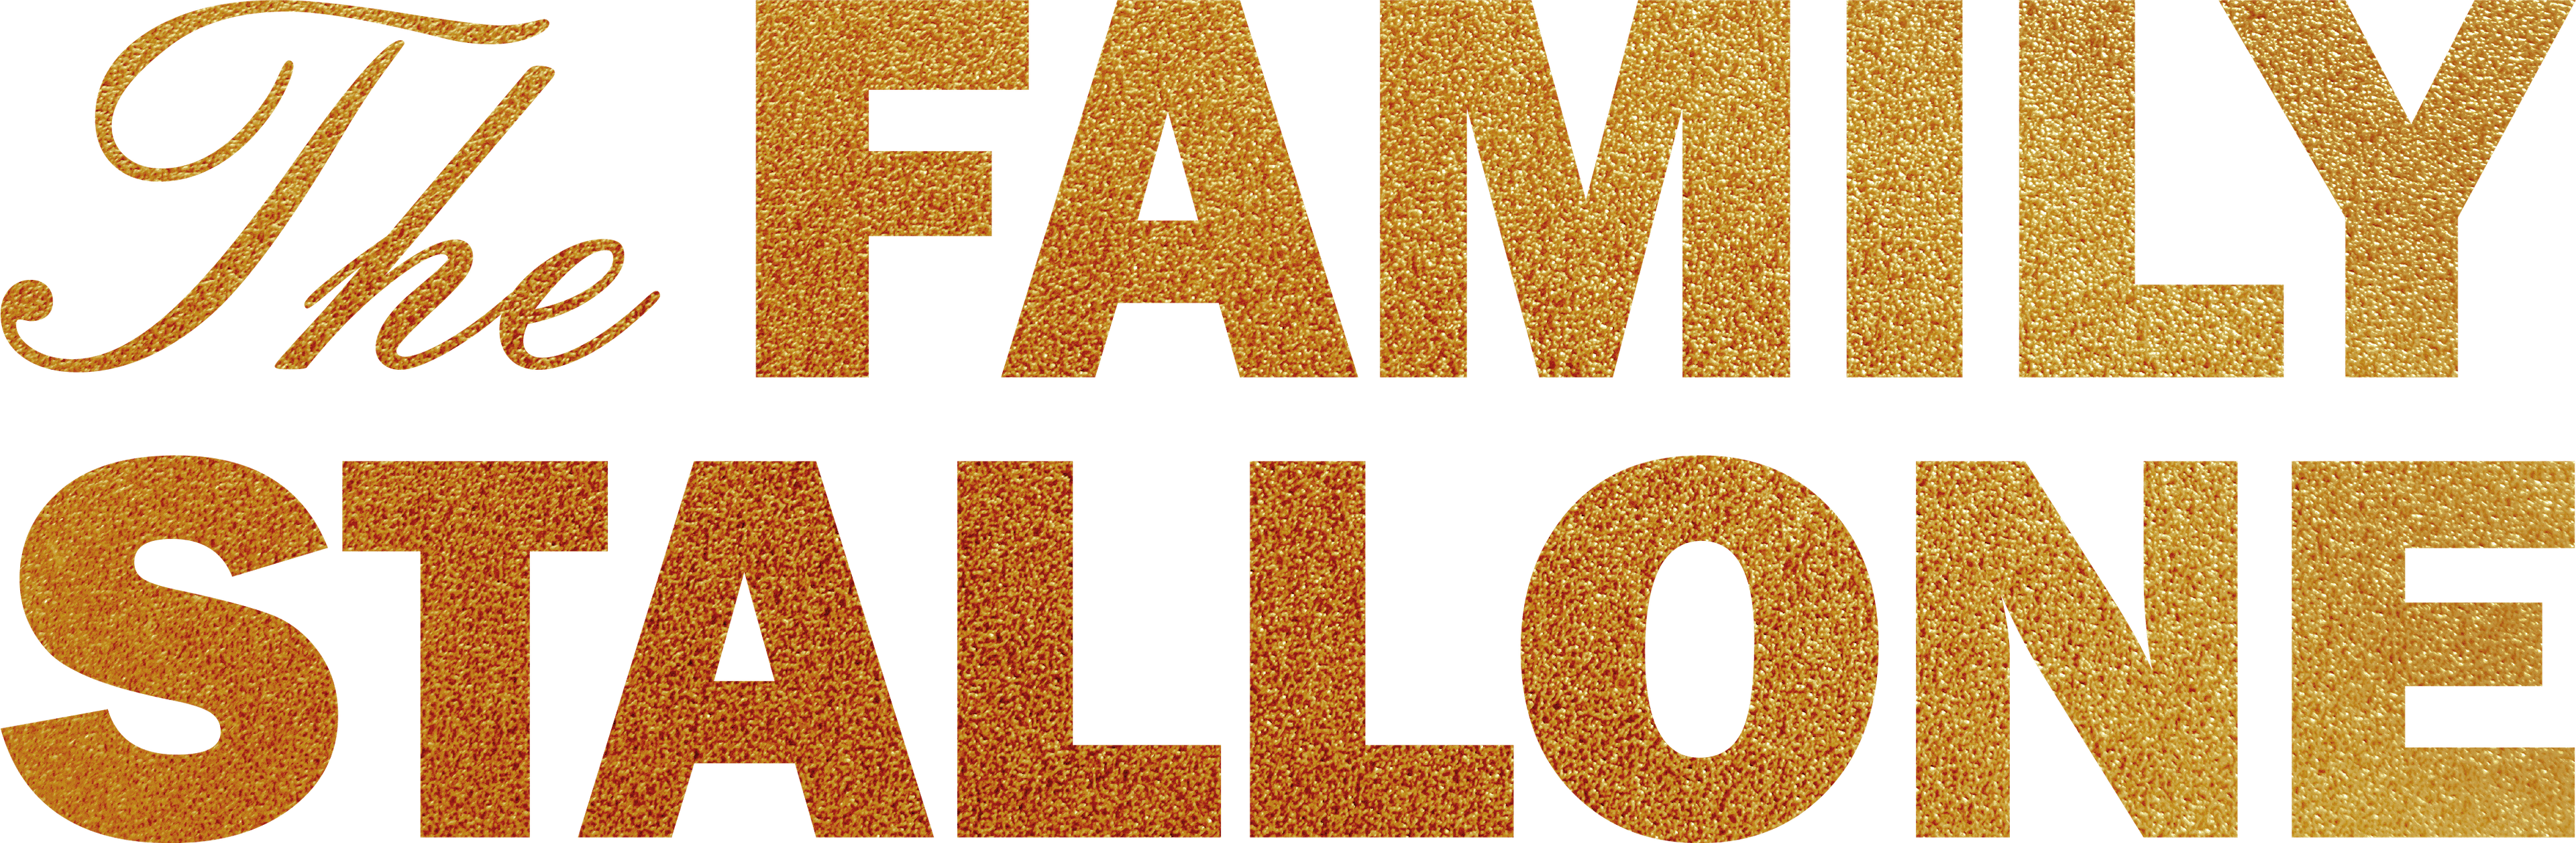 The Family Stallone logo